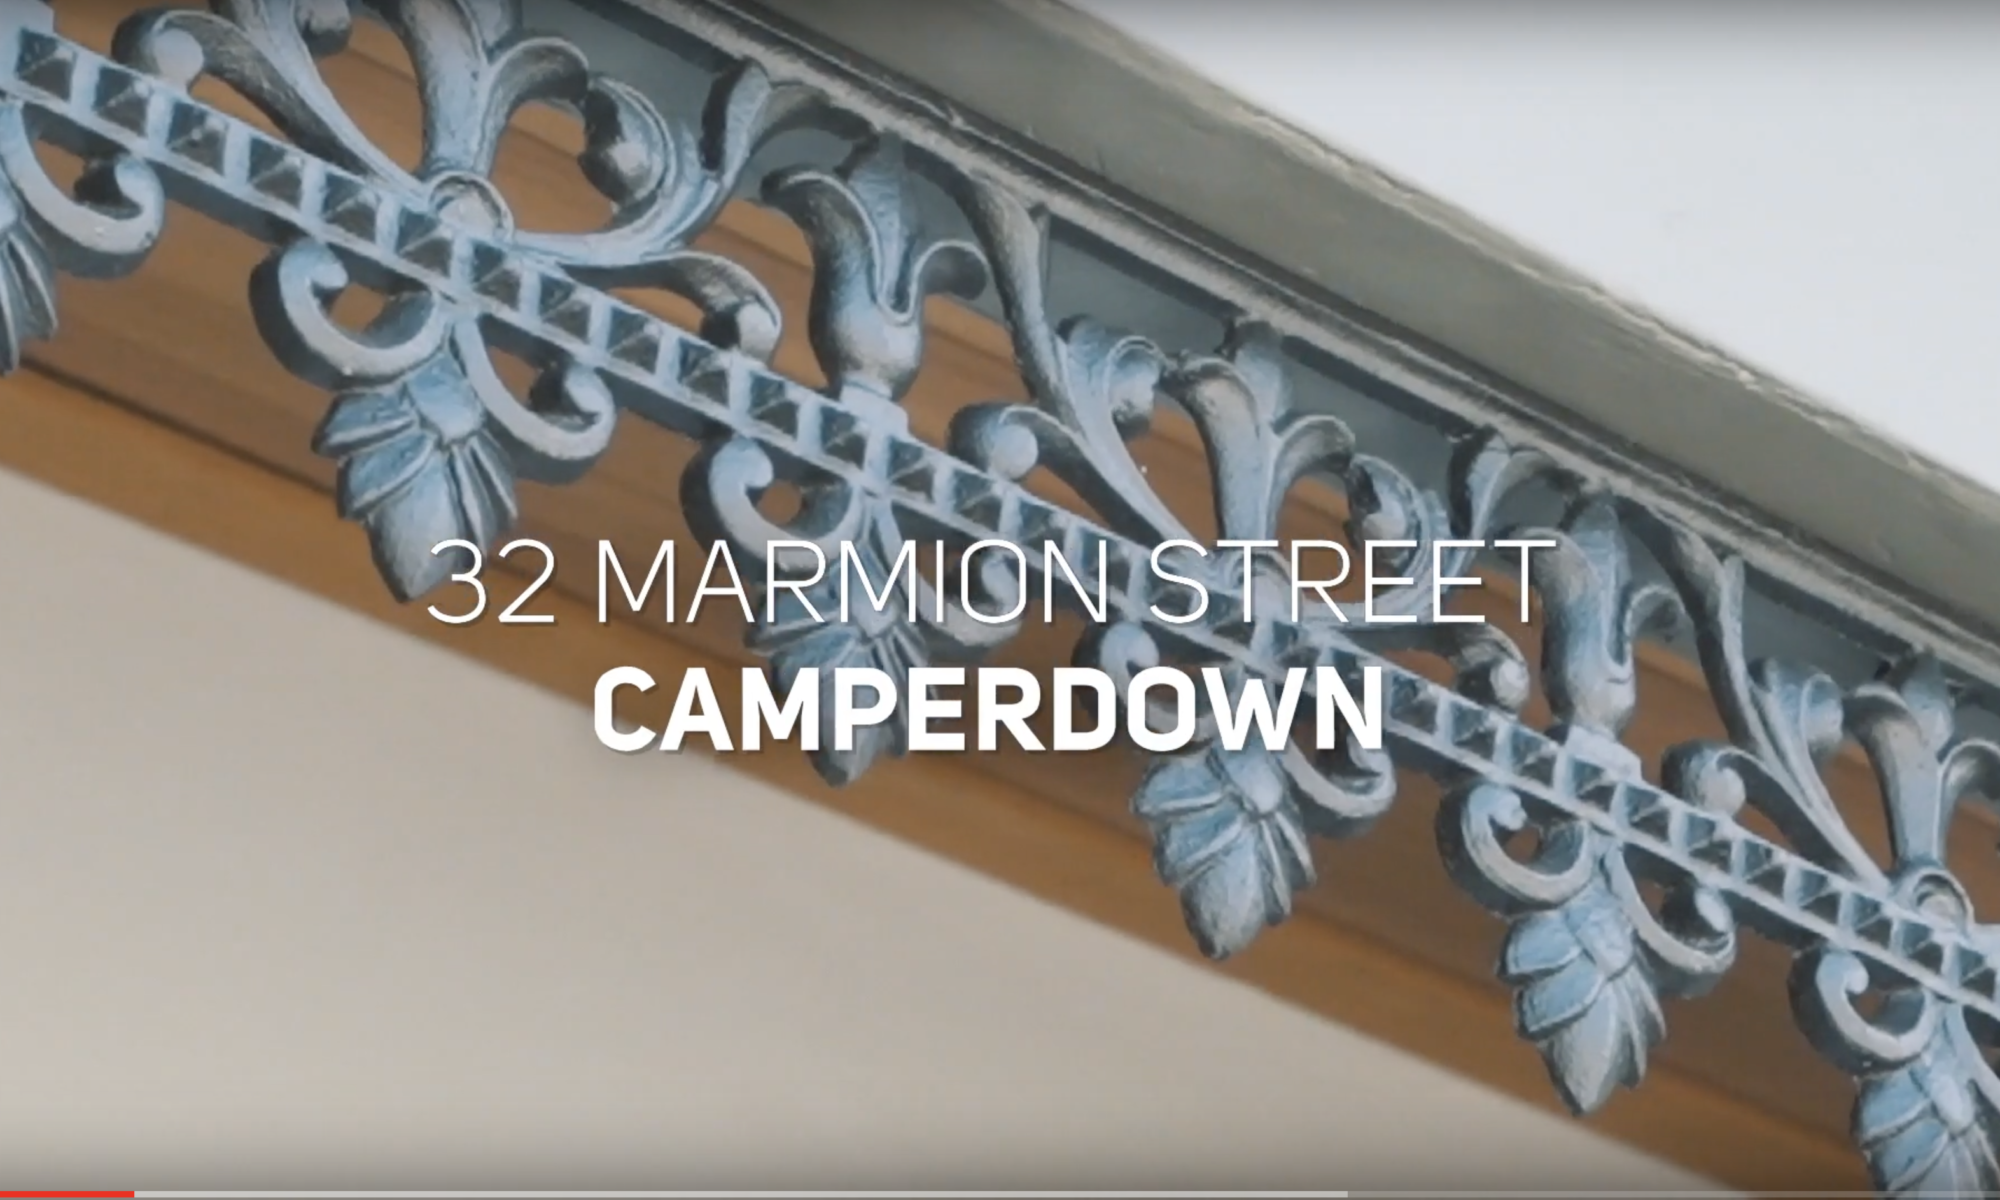 Marion street Camperdown luxury home real estate in Sydney